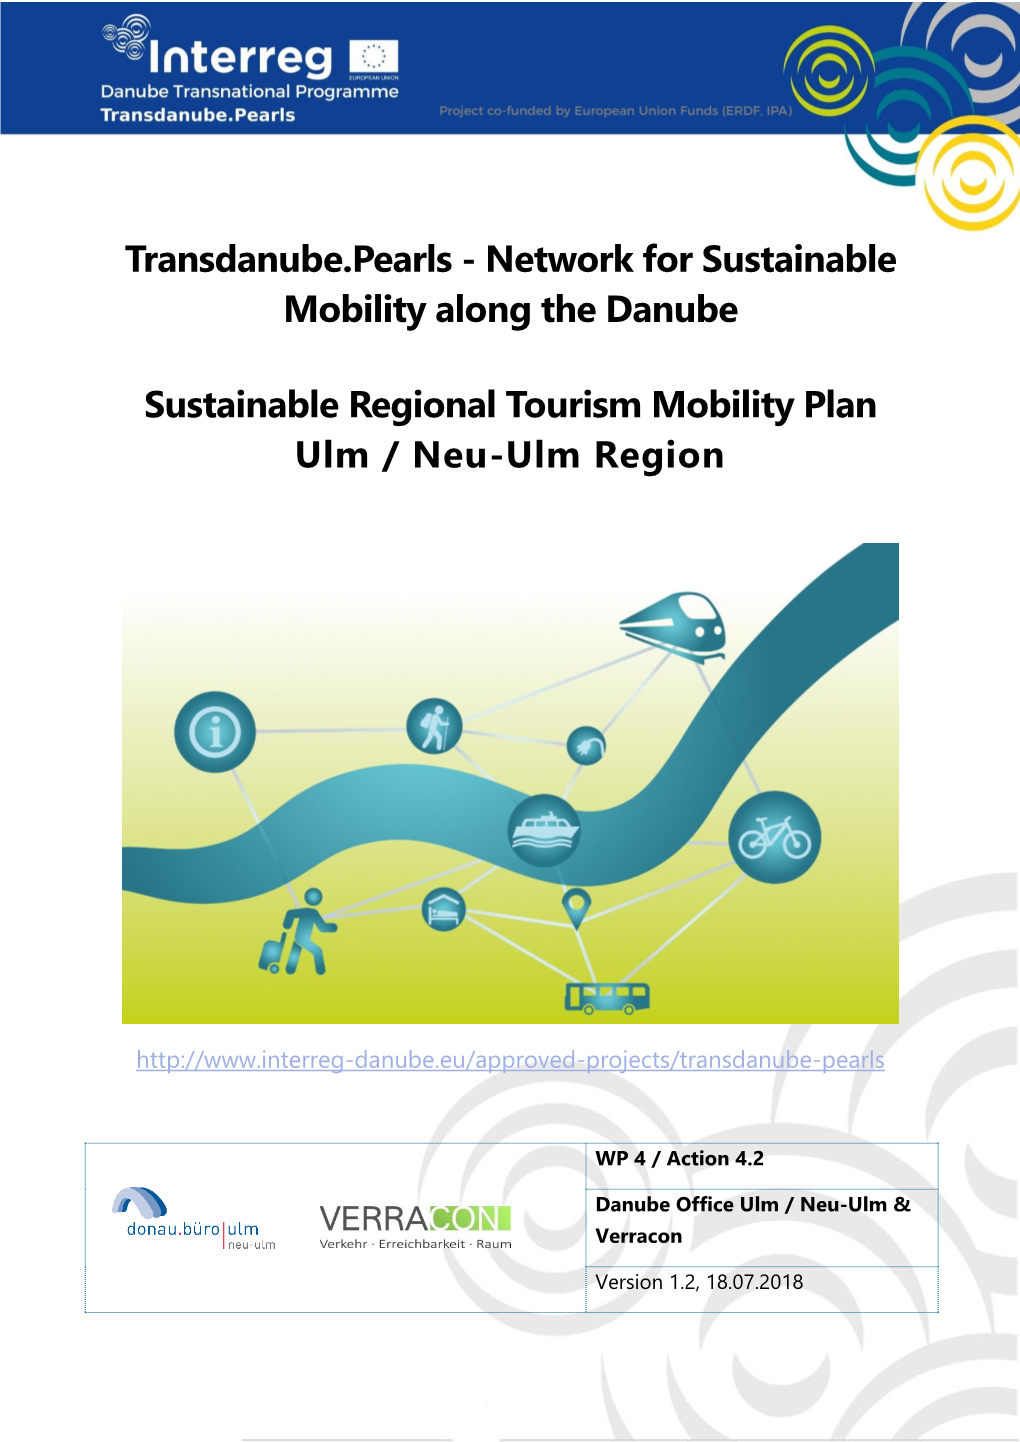 Sustainable Regional Tourism Mobility Plan Ulm / Neu-Ulm Region